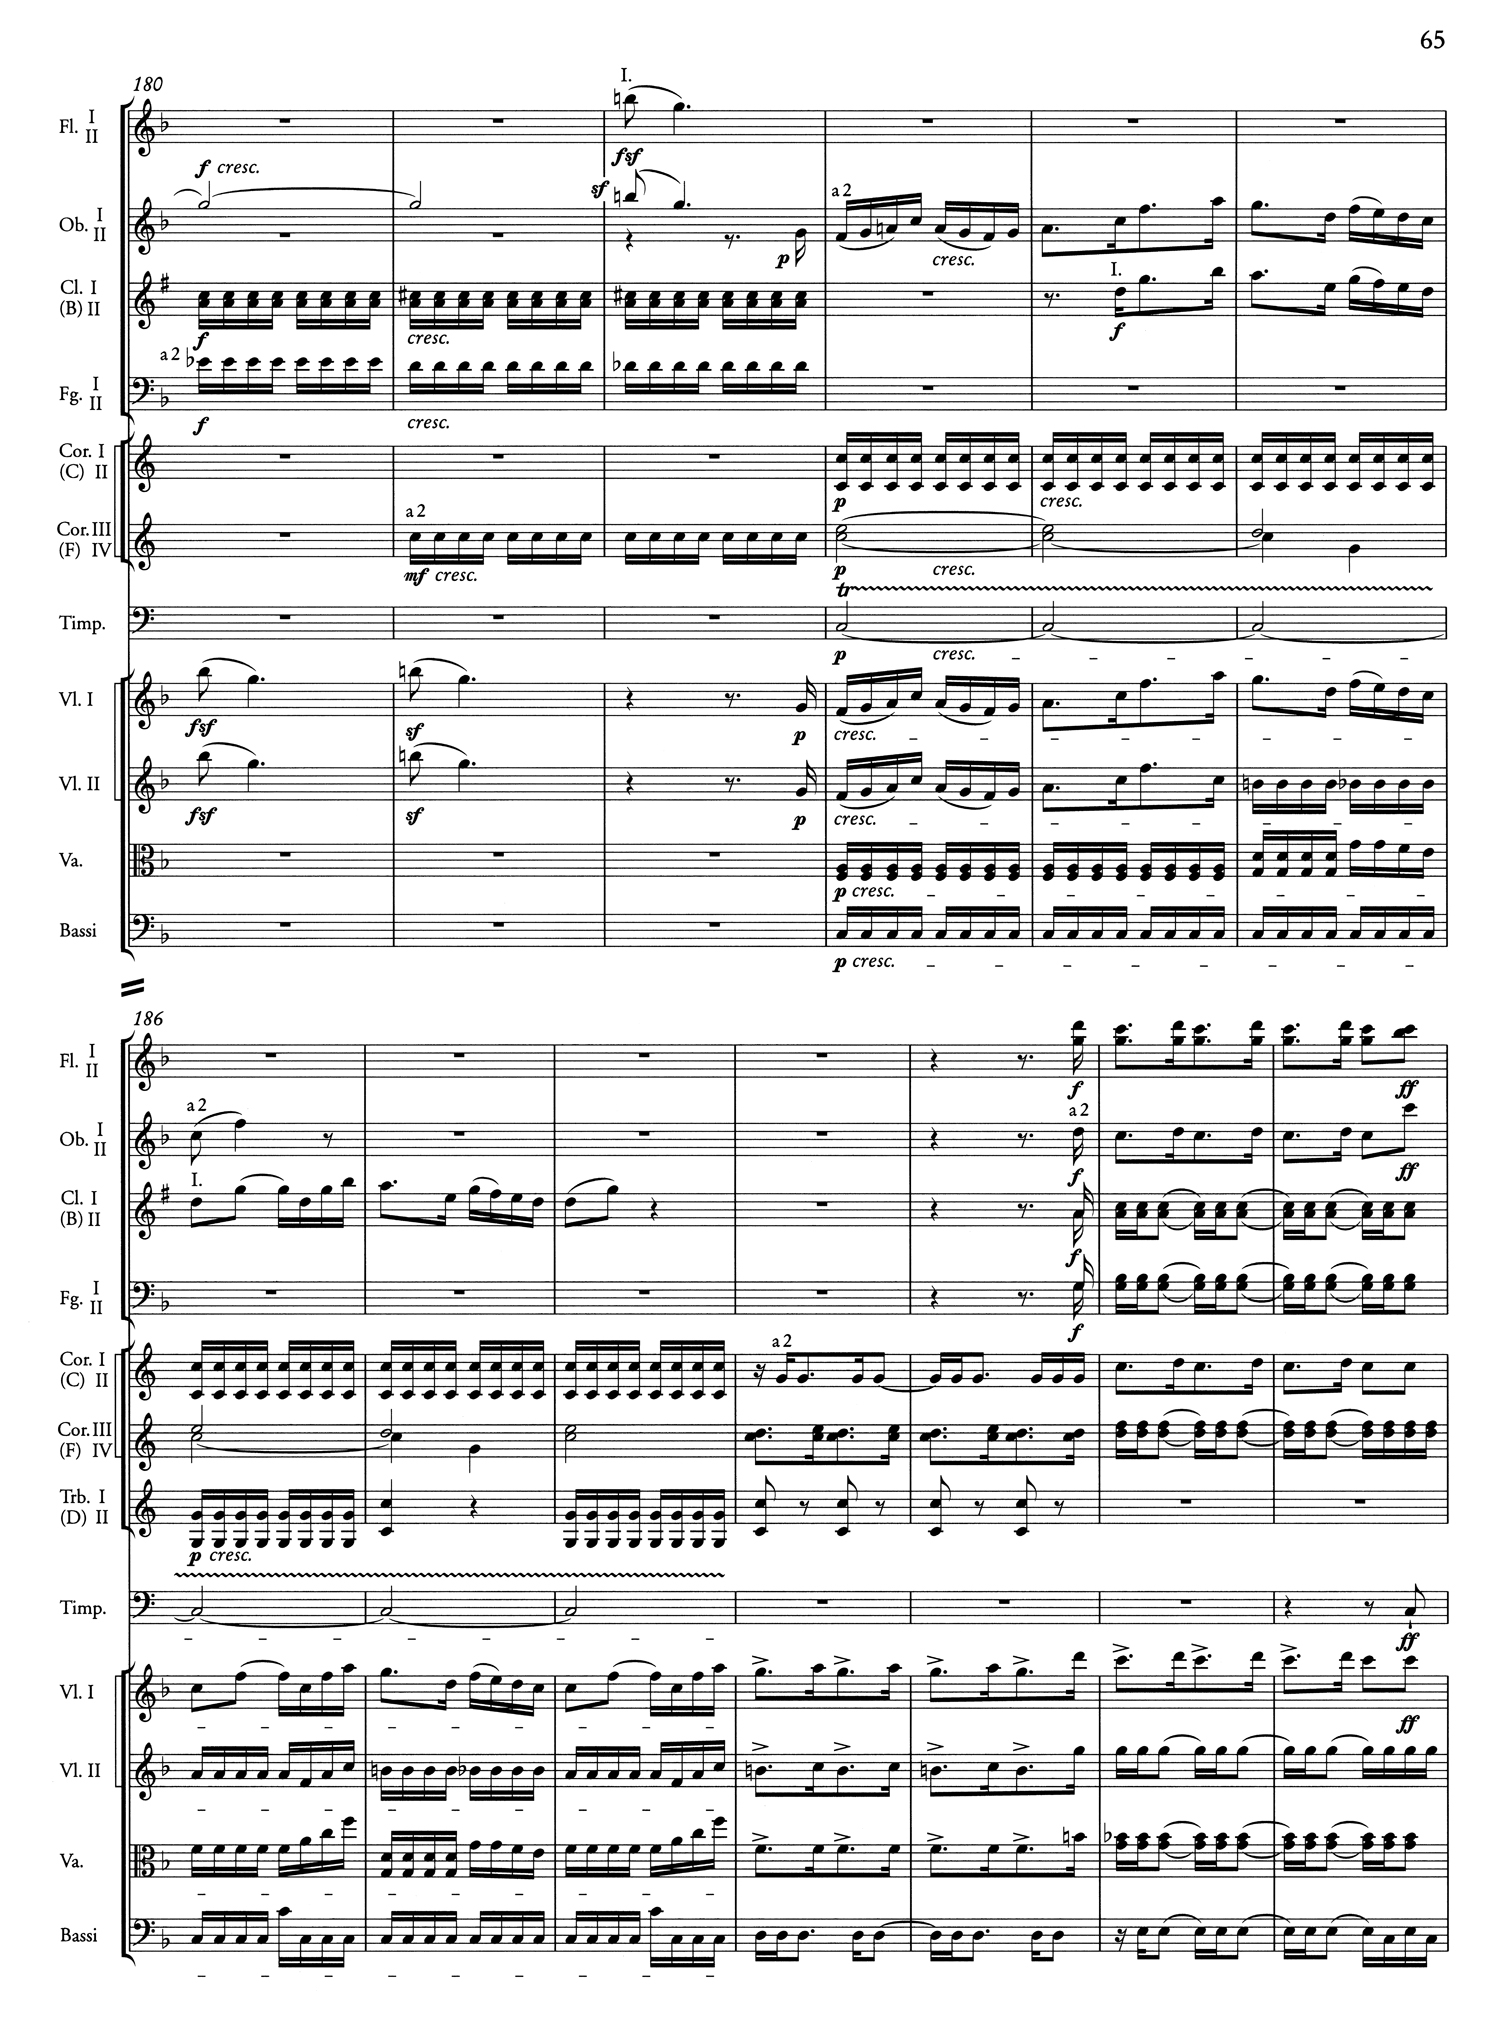 Mendelssohn Score 2 Page 1.jpg